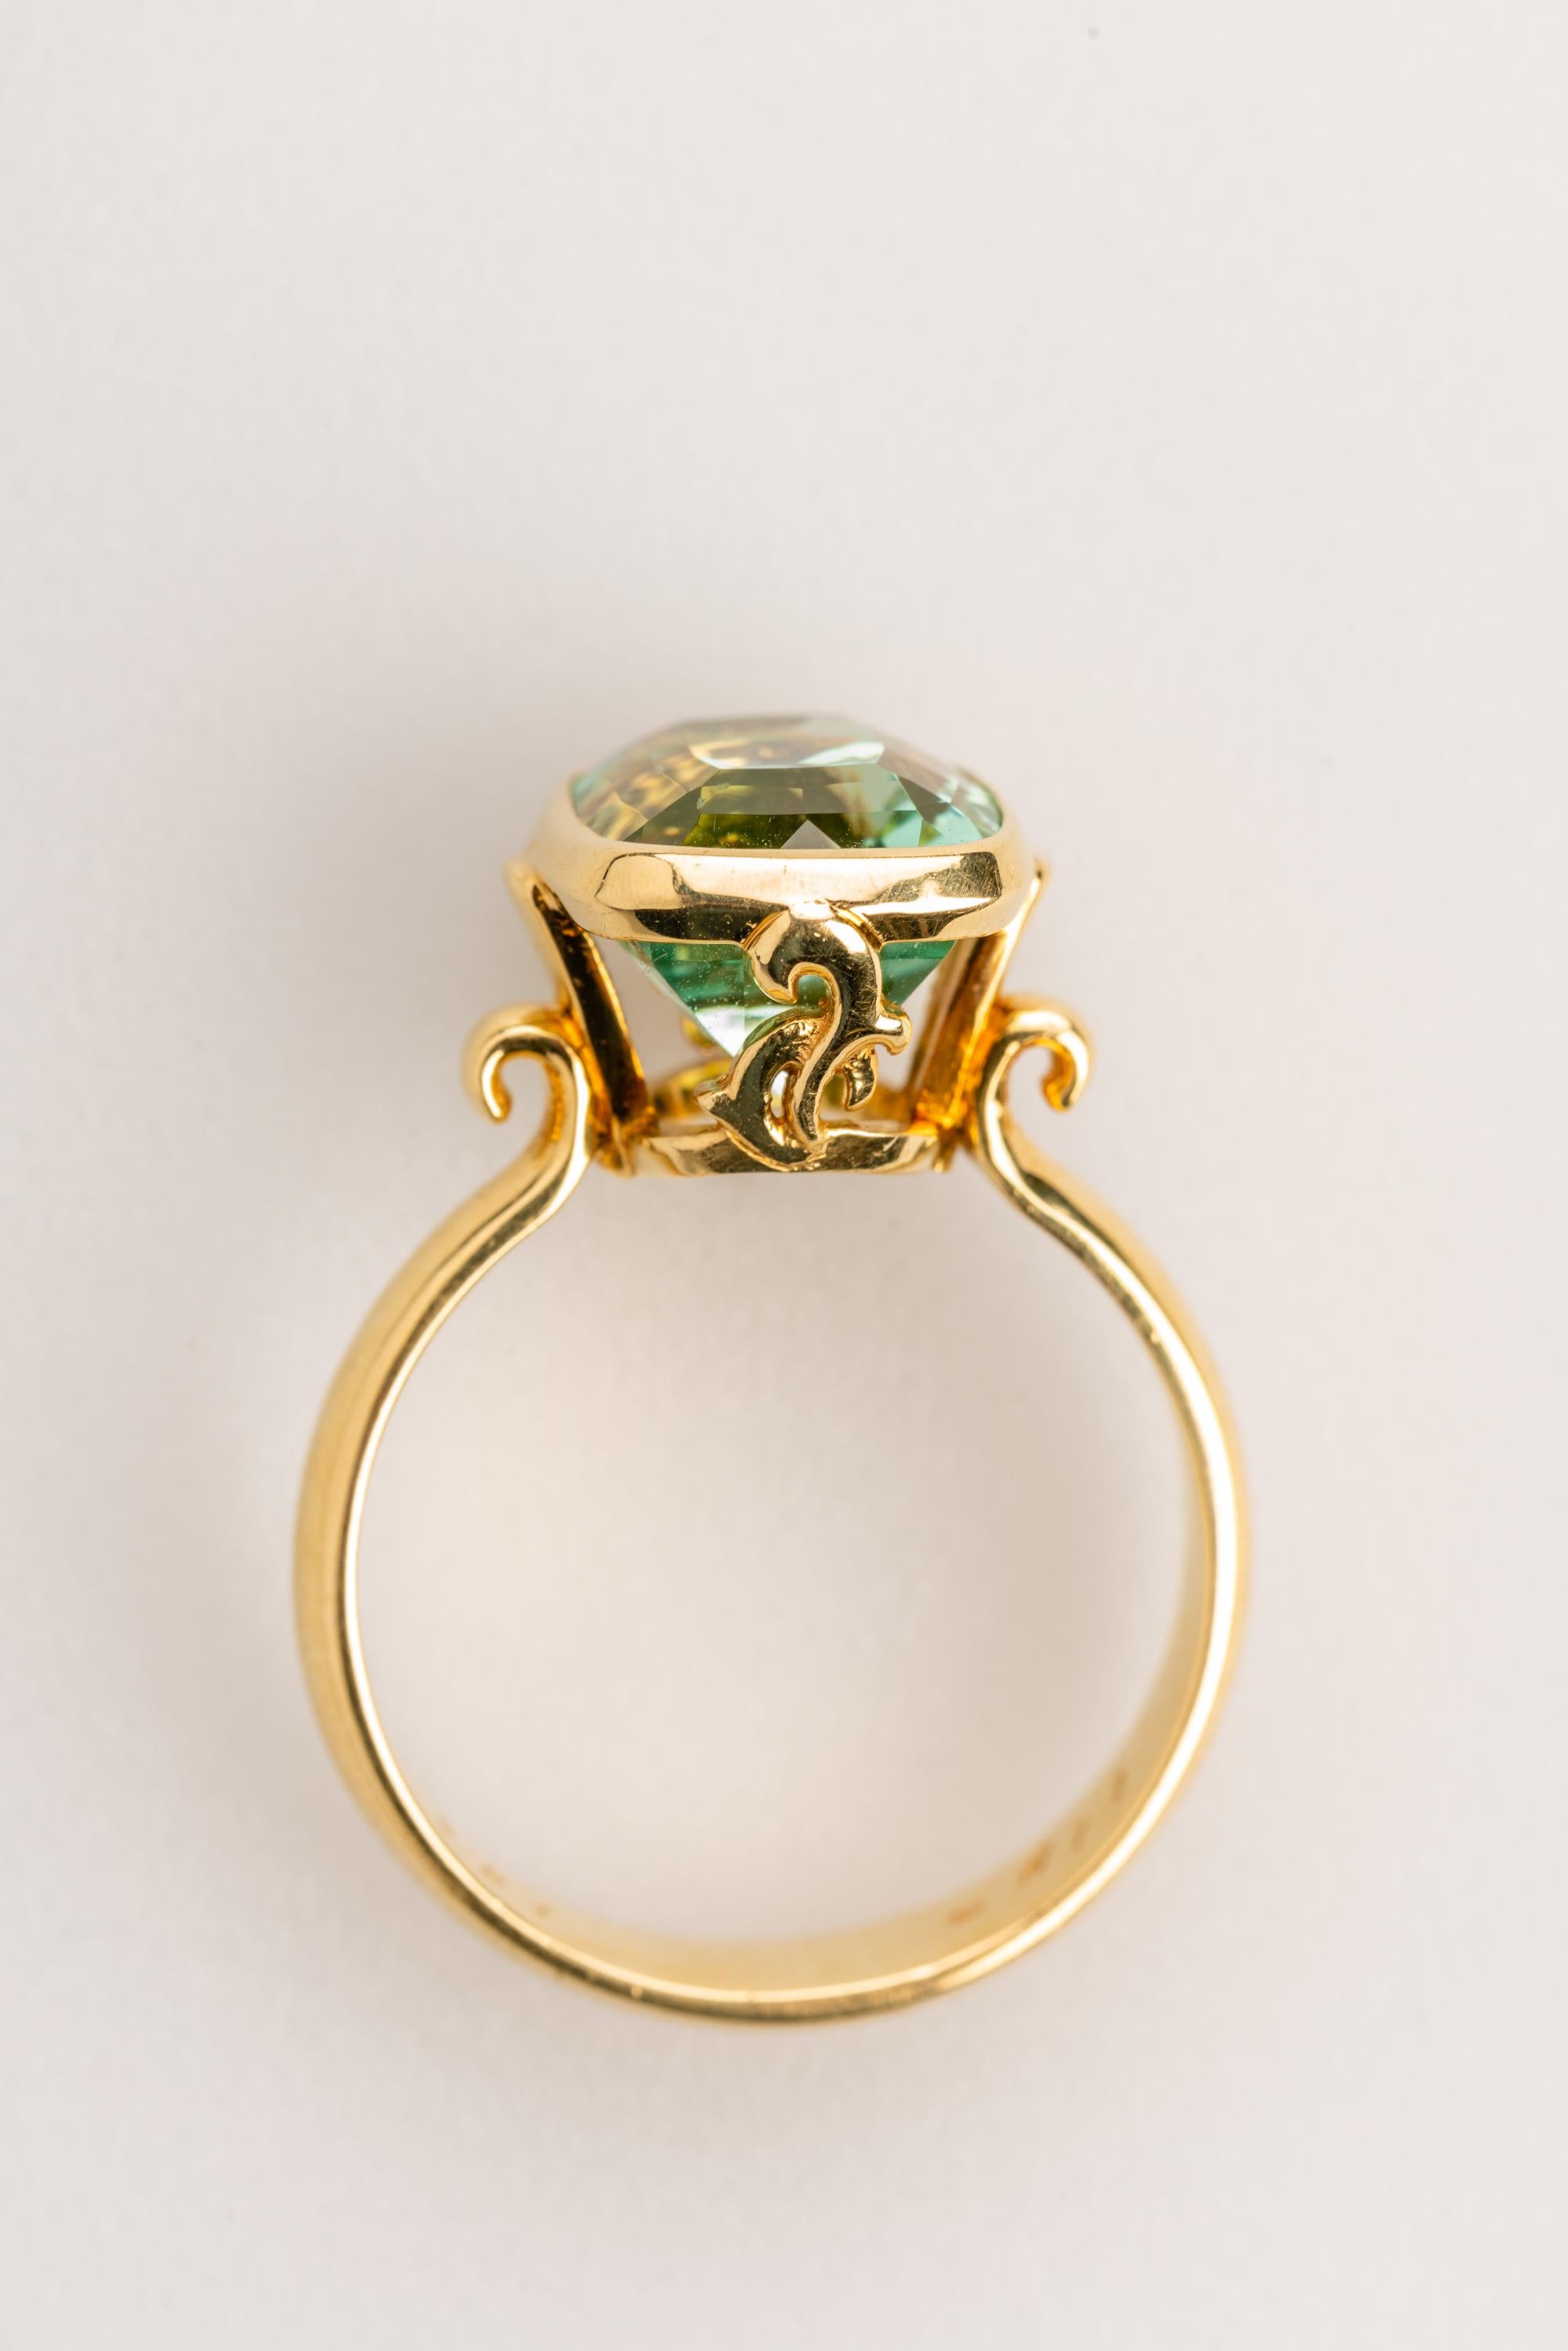 Contemporary 18 Karat Yellow Gold 5.32 Carat Mint Green Tourmaline Ring